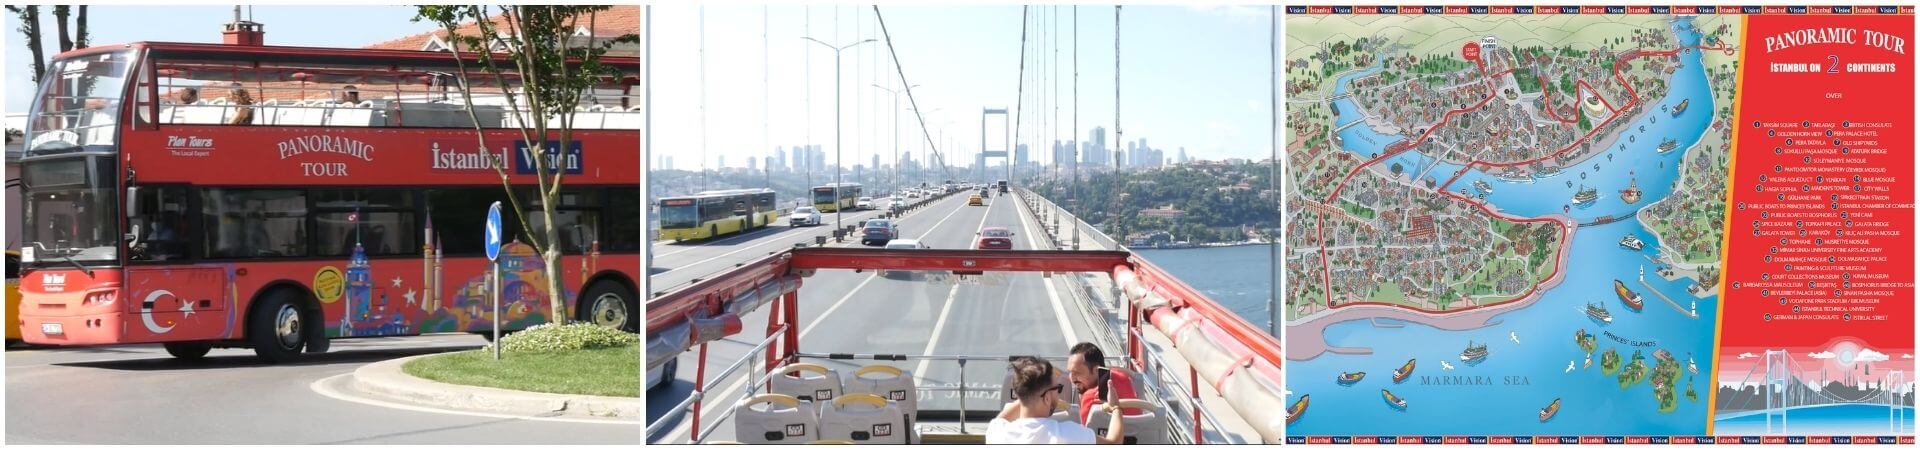 Tour panorámico en autobús por Estambul